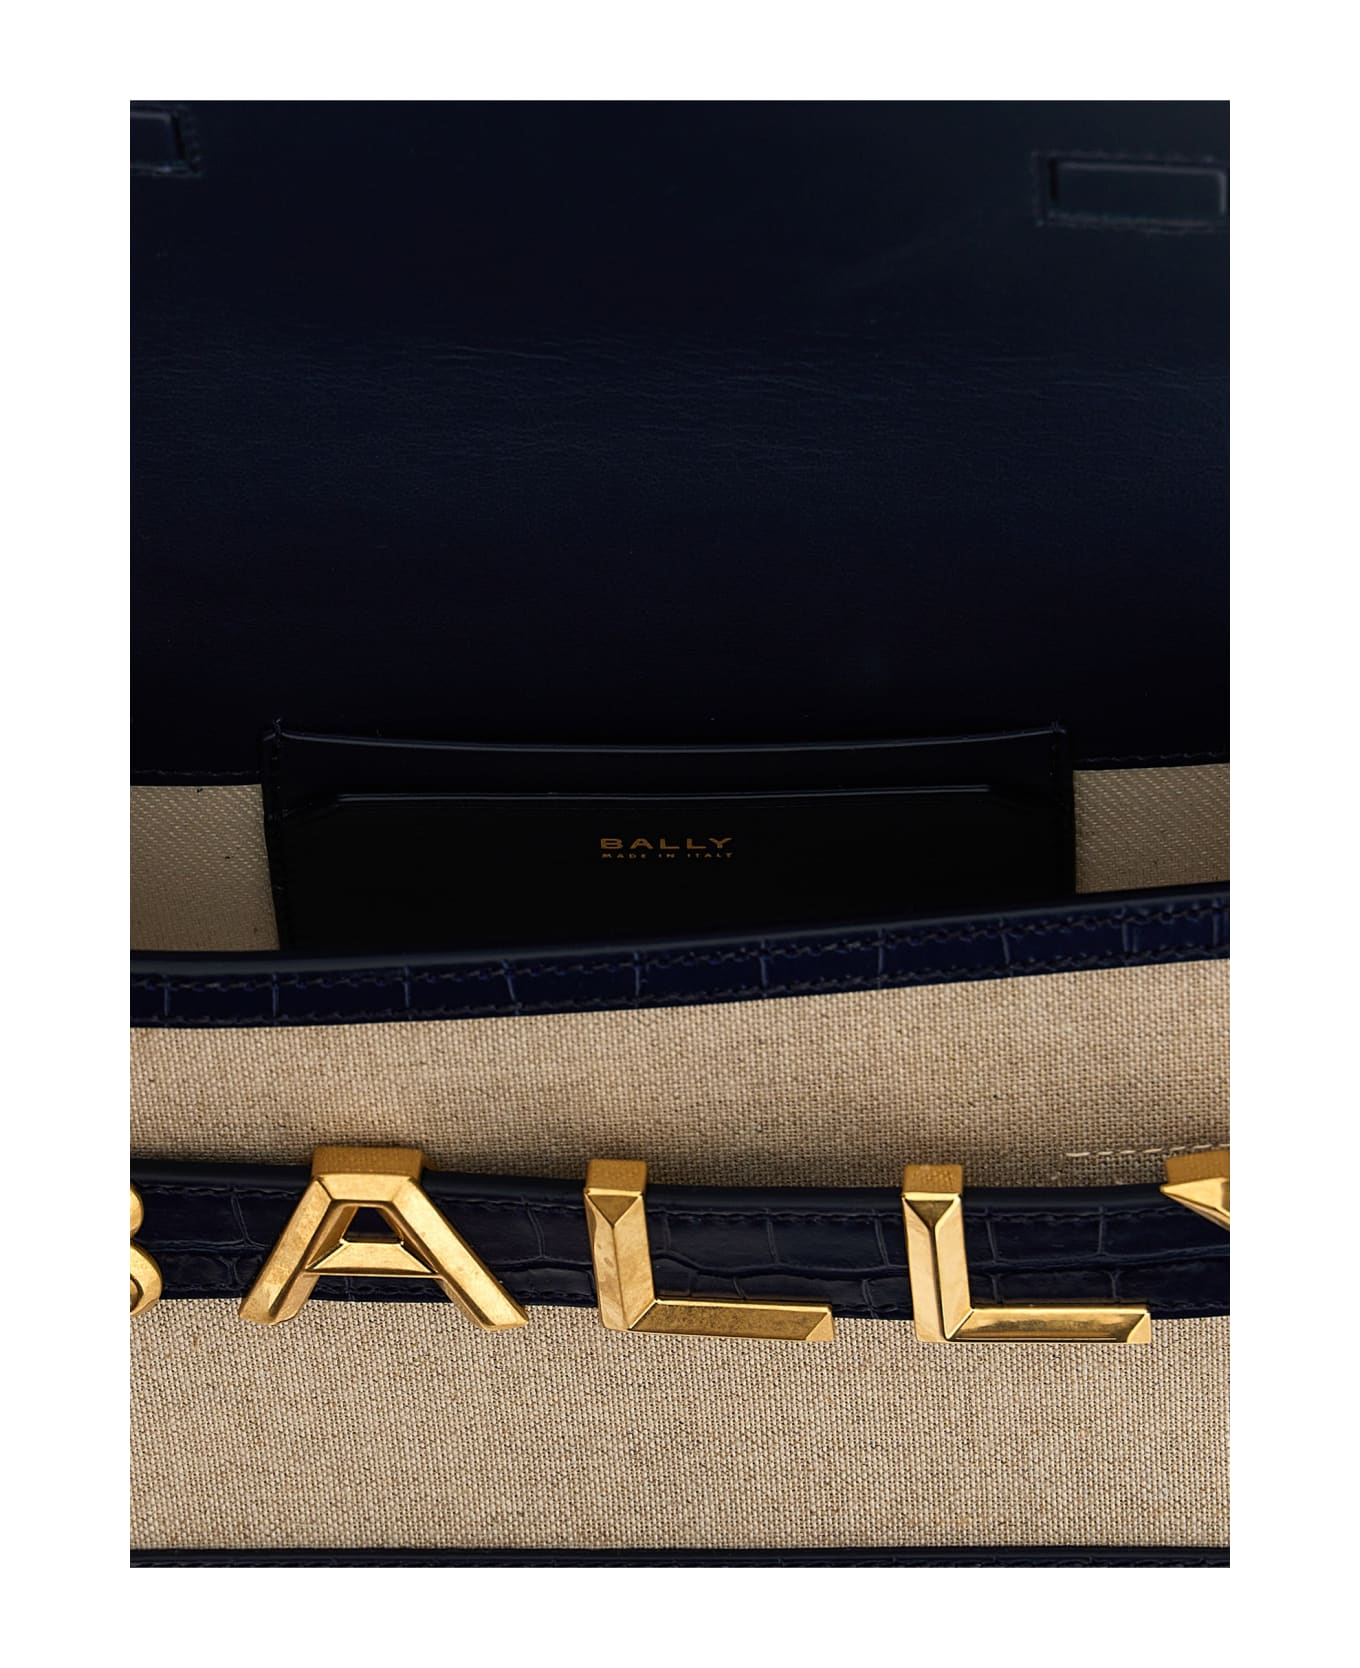 Bally Logo Leather Canvas Crossbody Bag - Blue